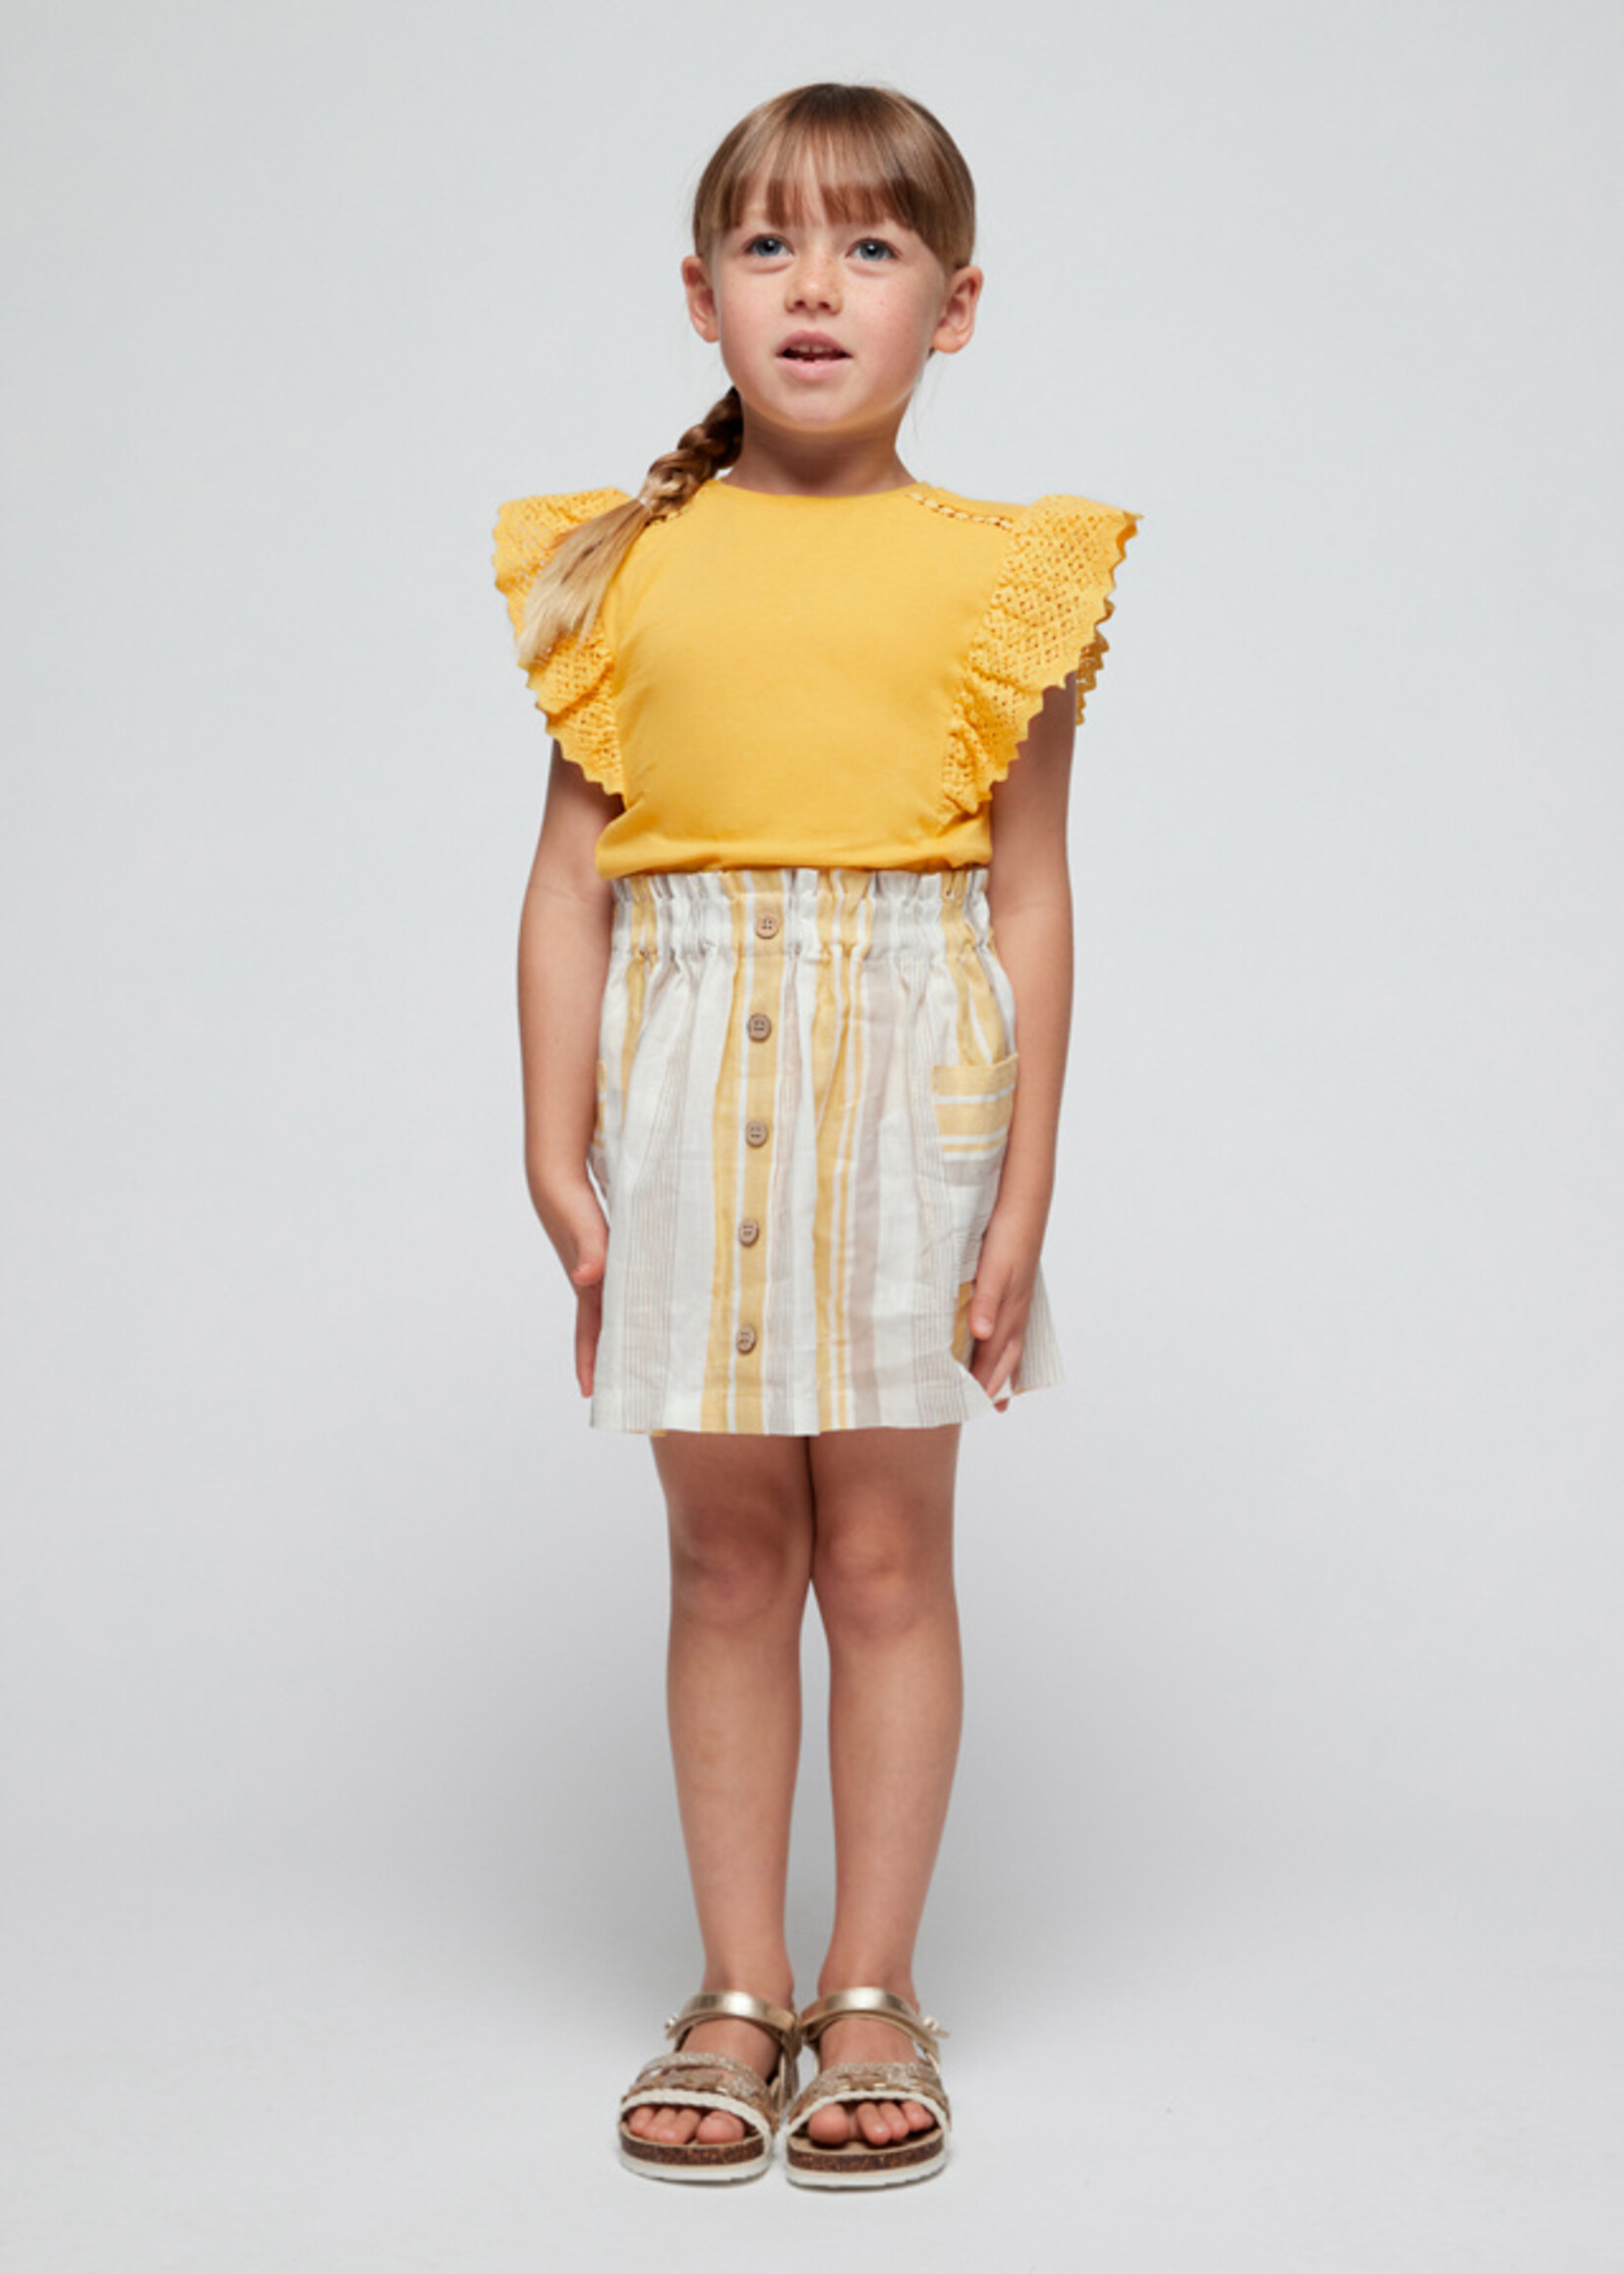 Mayoral Mini Girl            3082 S/s t-shirt                   Blush